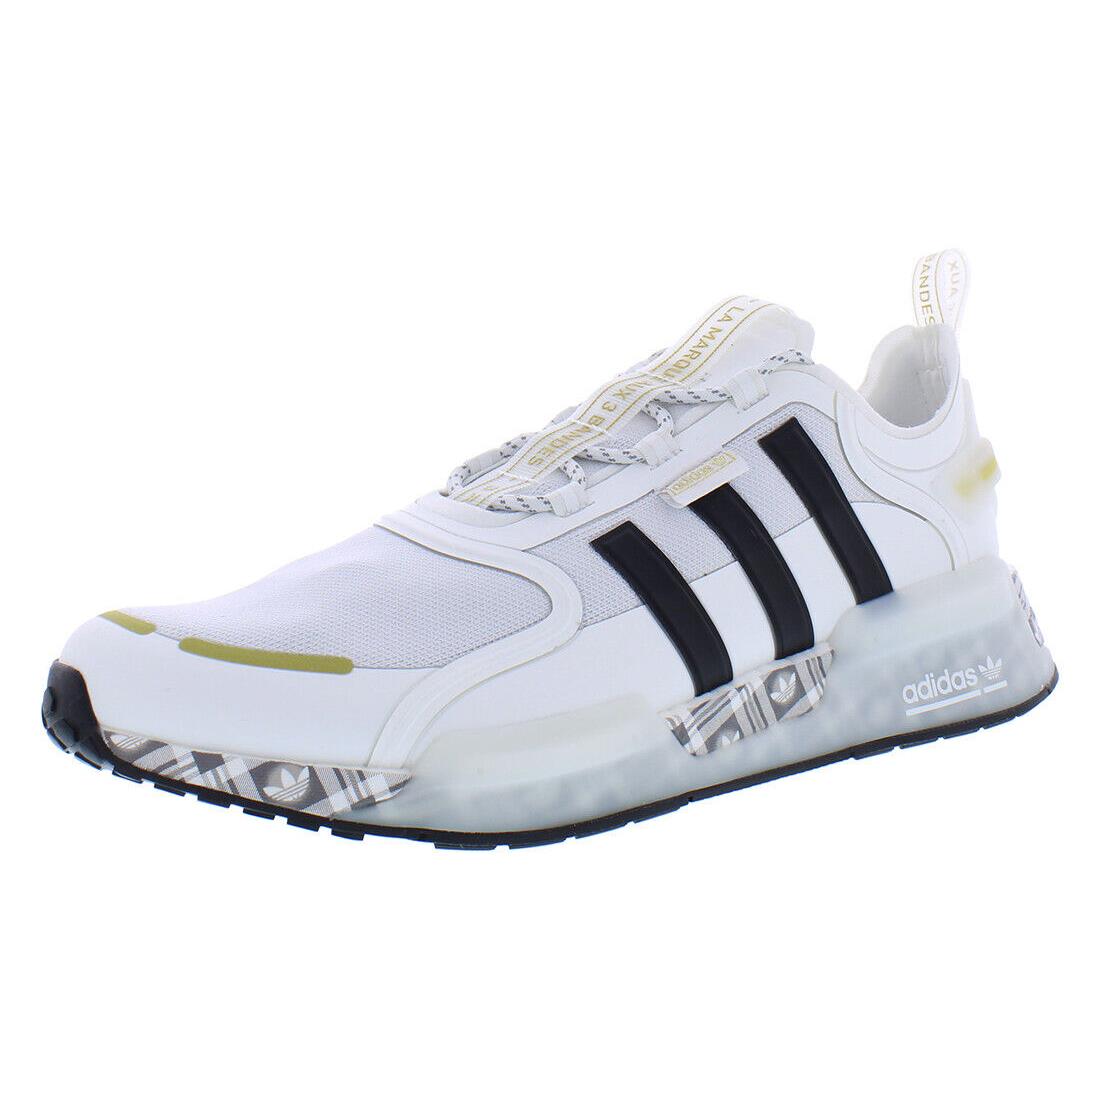 Adidas Nmd V3 Mens Shoes - White/Black/Gold, Main: White